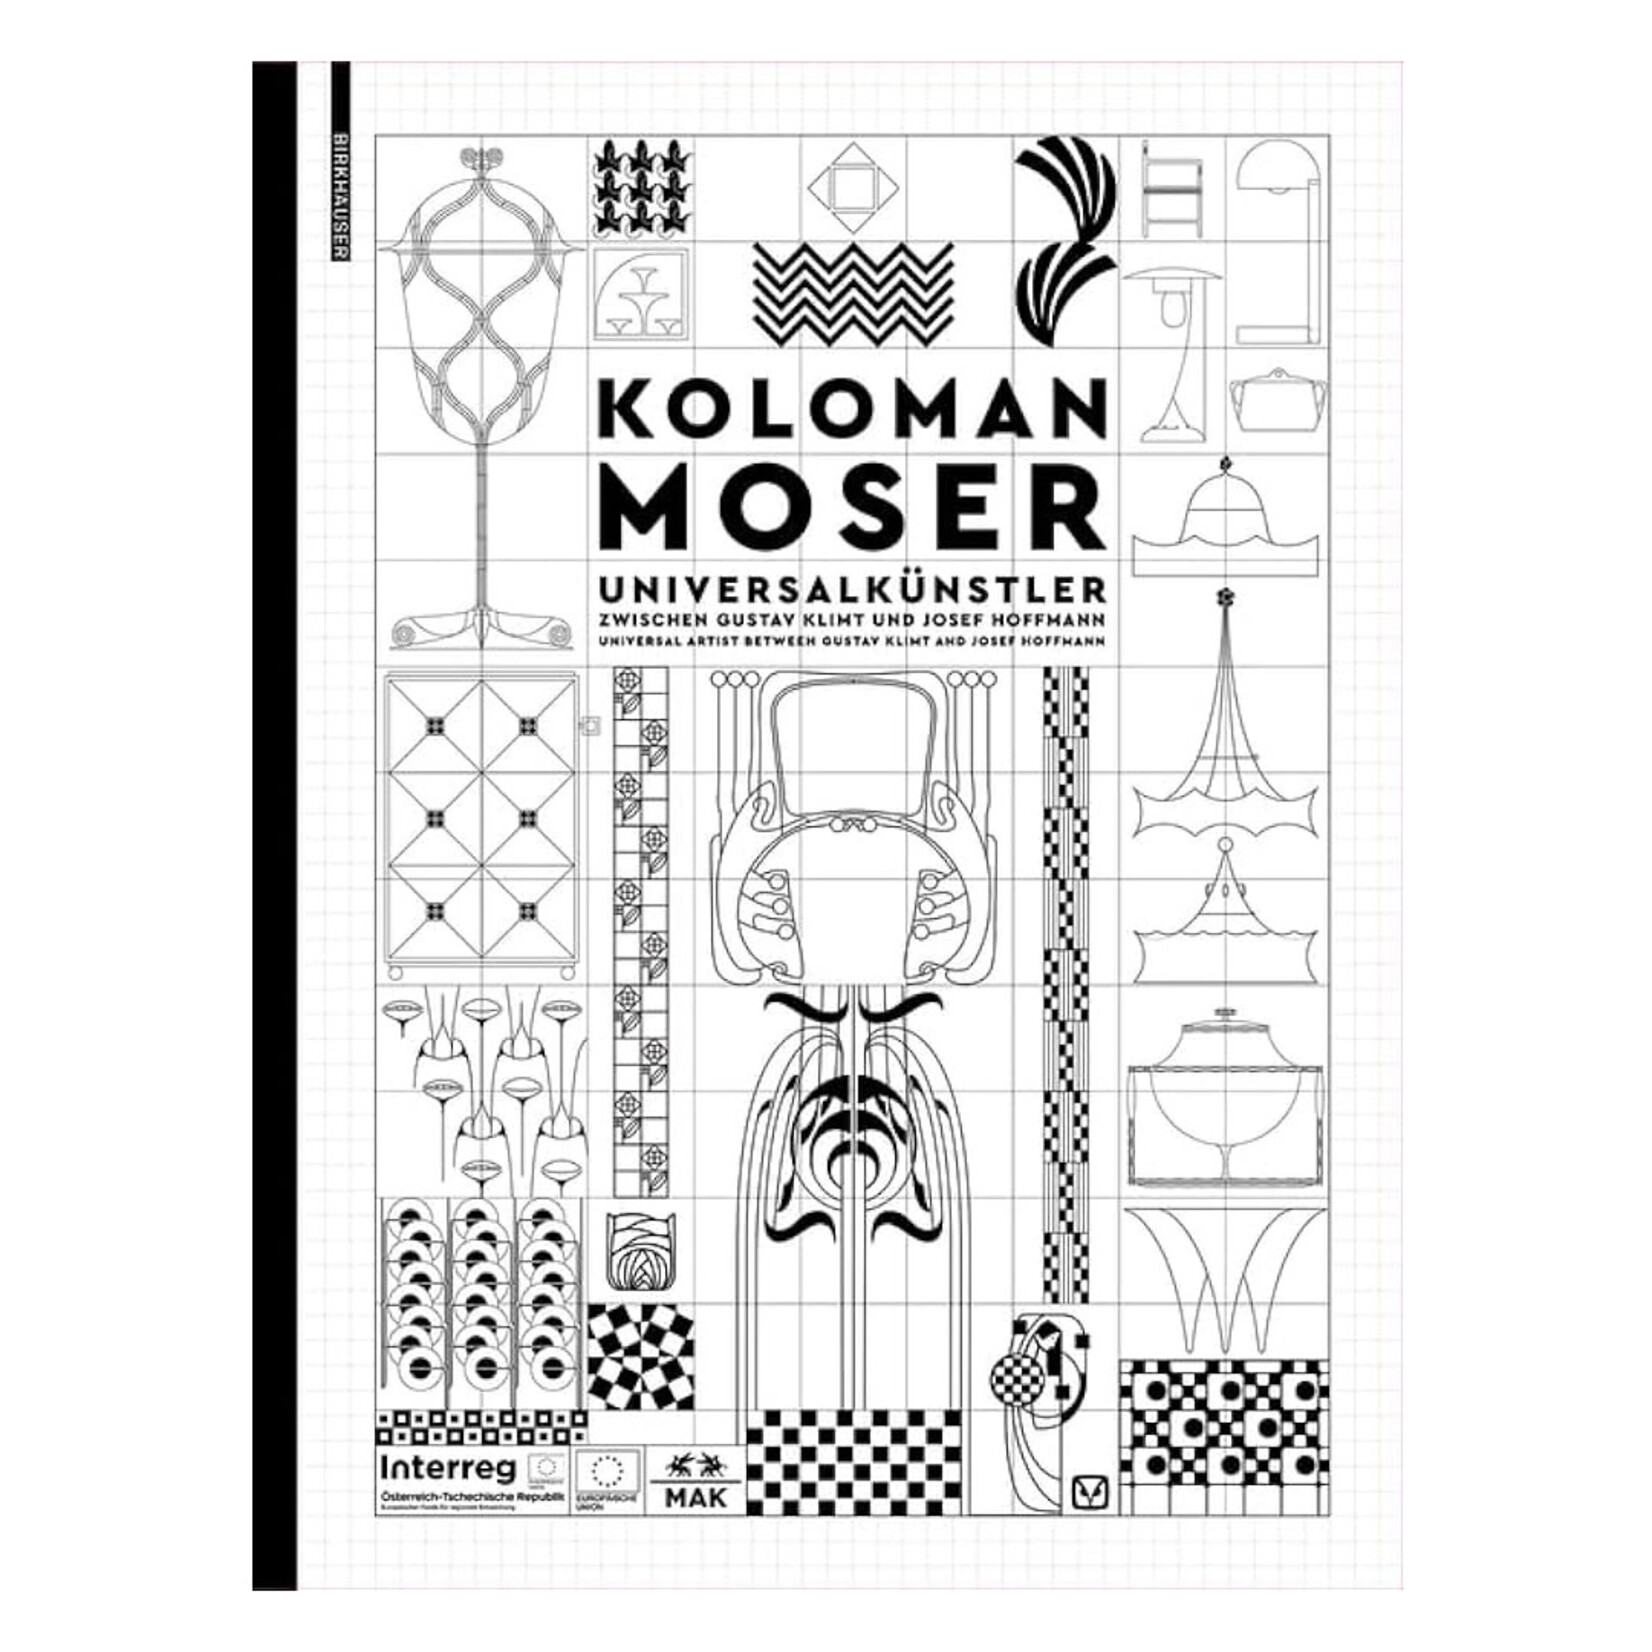 Koloman Moser: Universal Artist Between Gustav Klimt and Josef Hoffman